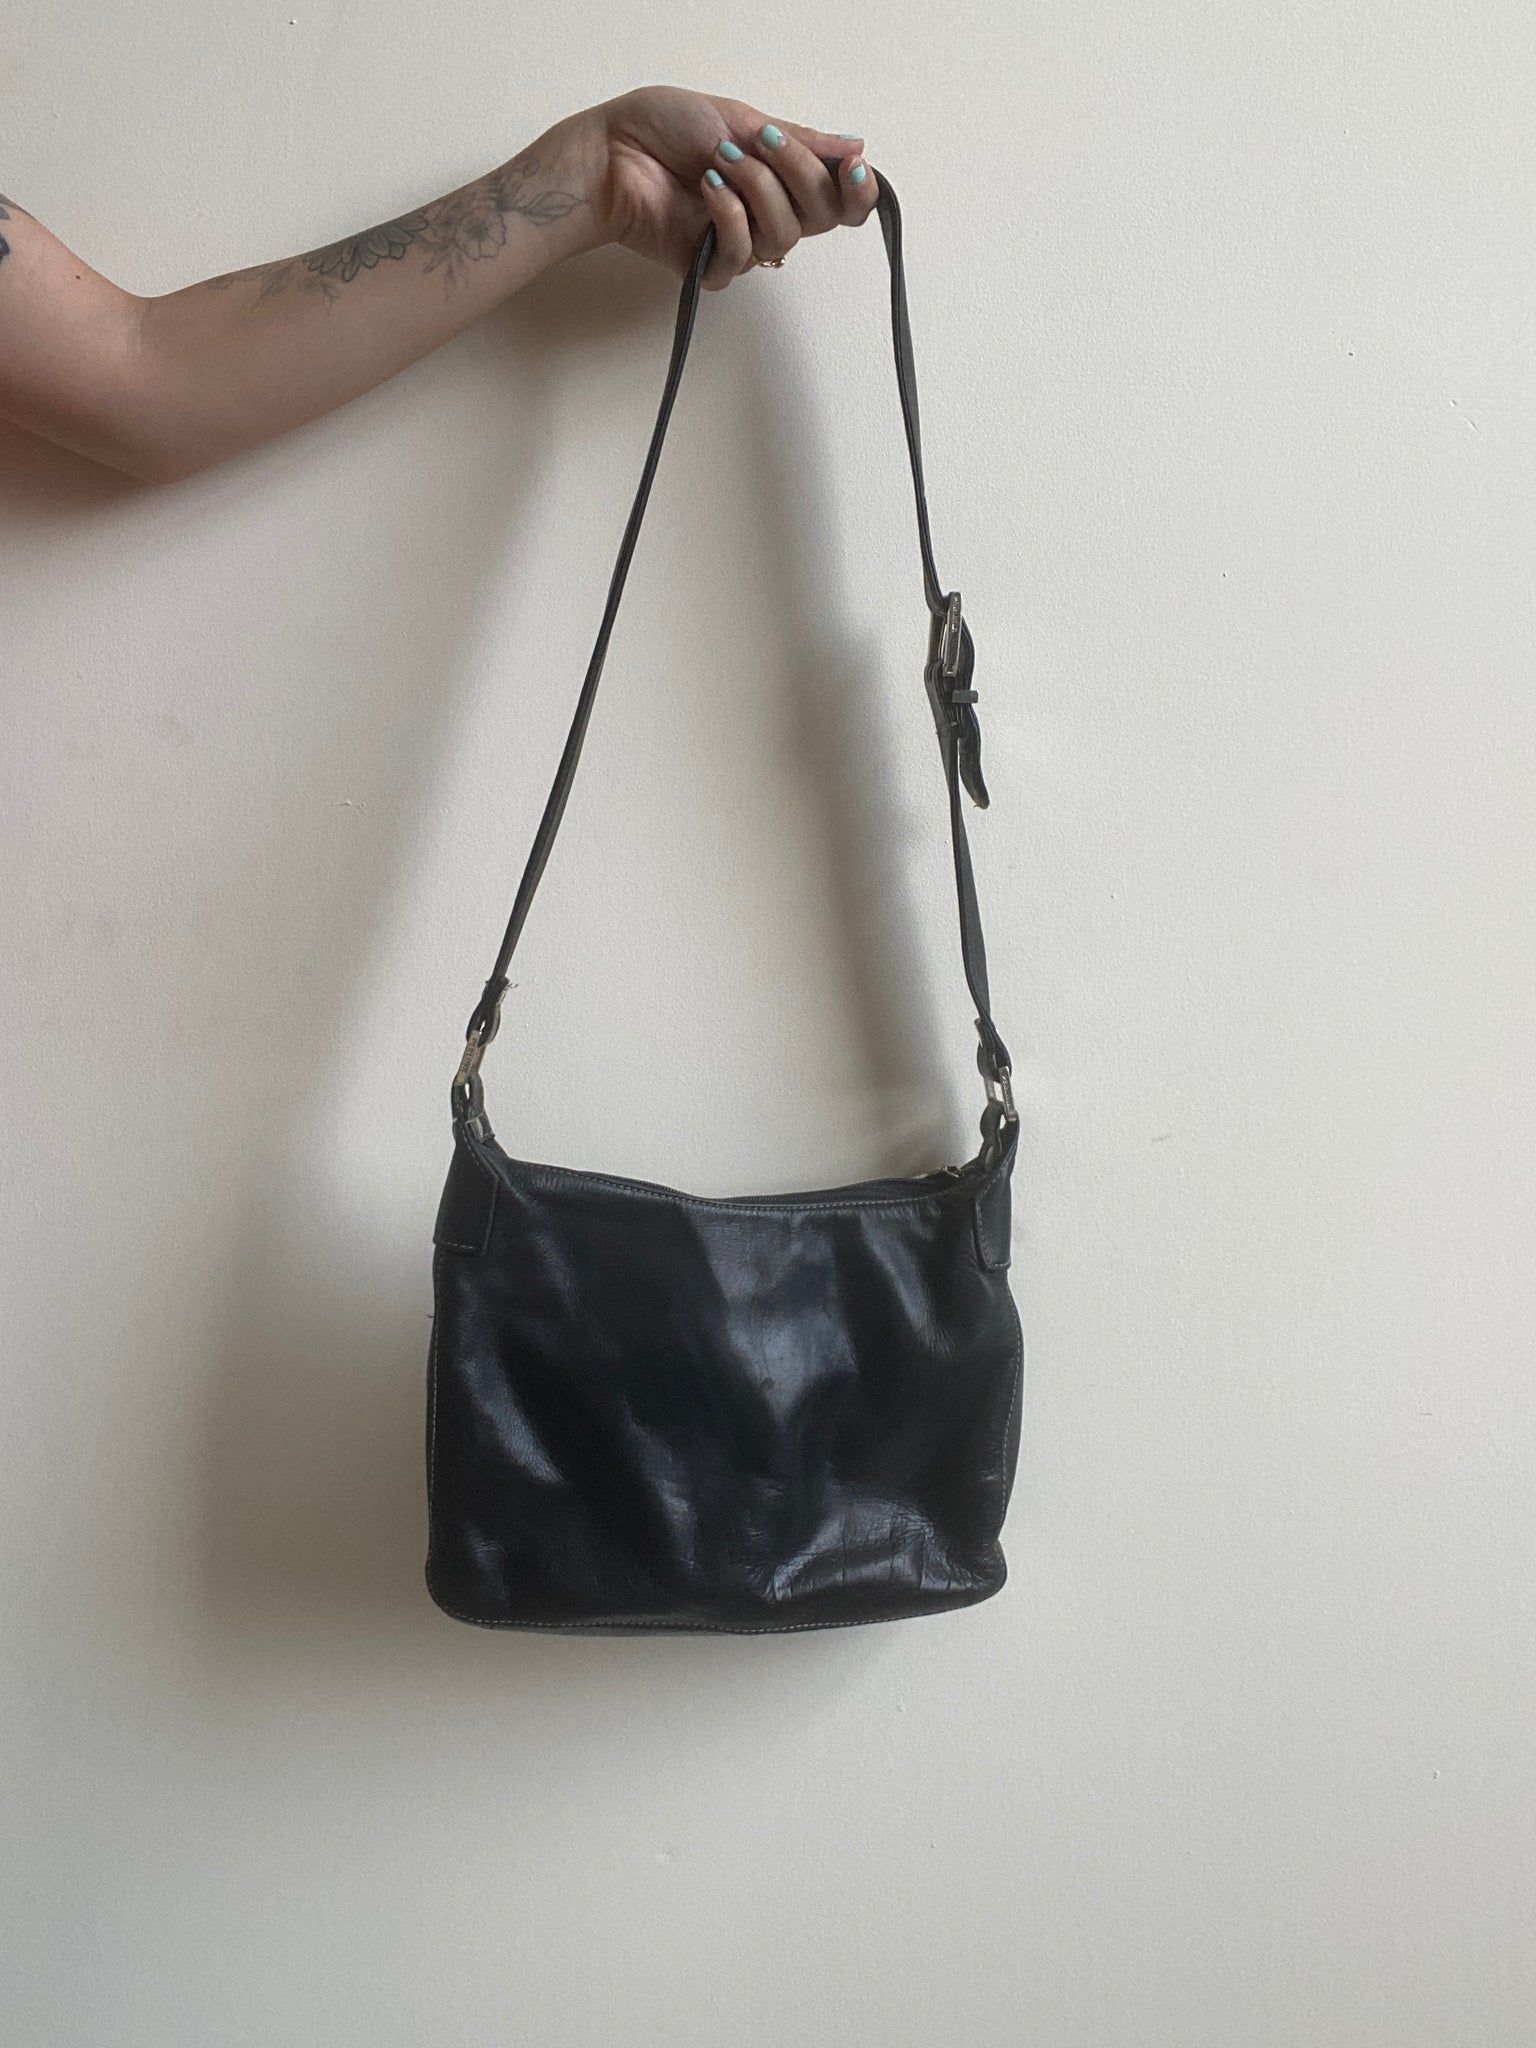 Vintage Black Perlina Buttery Soft Leather Bag